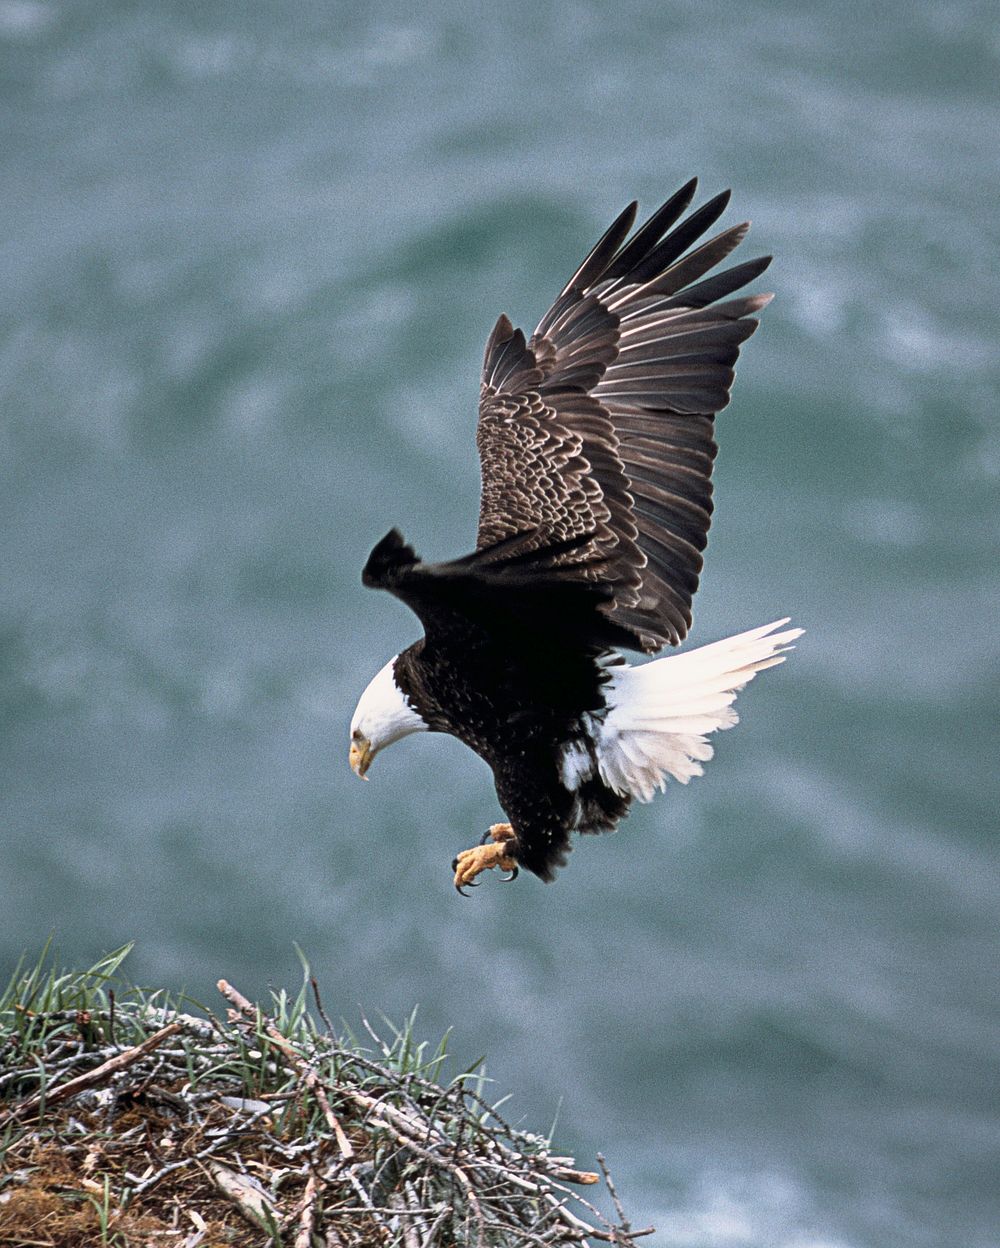 Free bald eagle image, public domain bird CC0 photo.